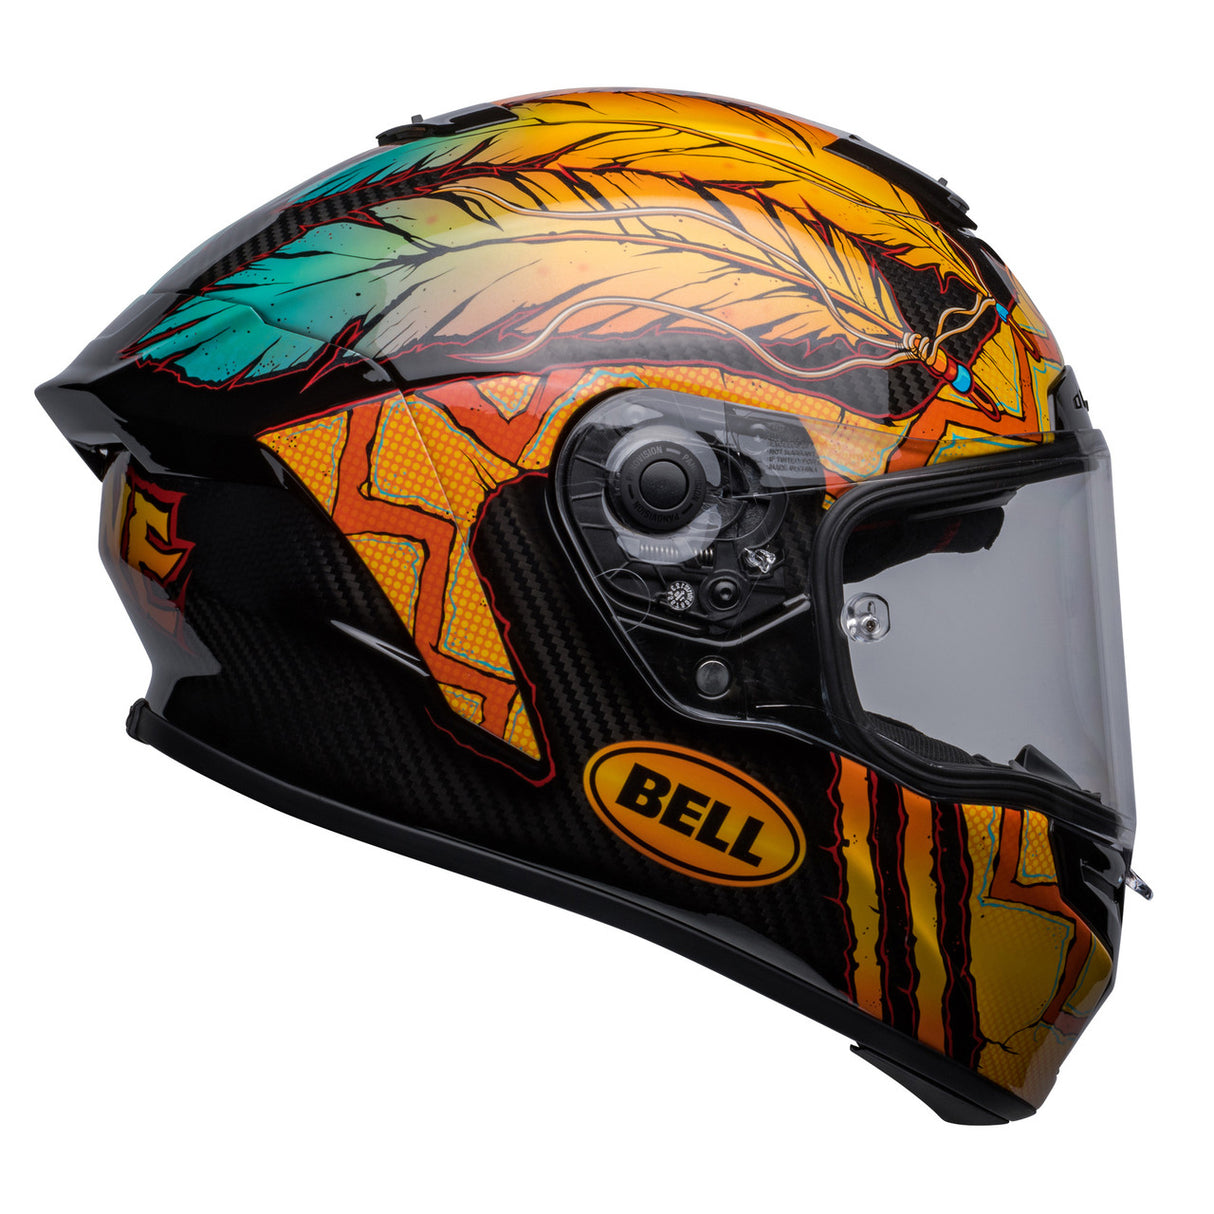 Bell Racestar Dlx Helmet - Dunne Limited Edition Matt Gold/Black